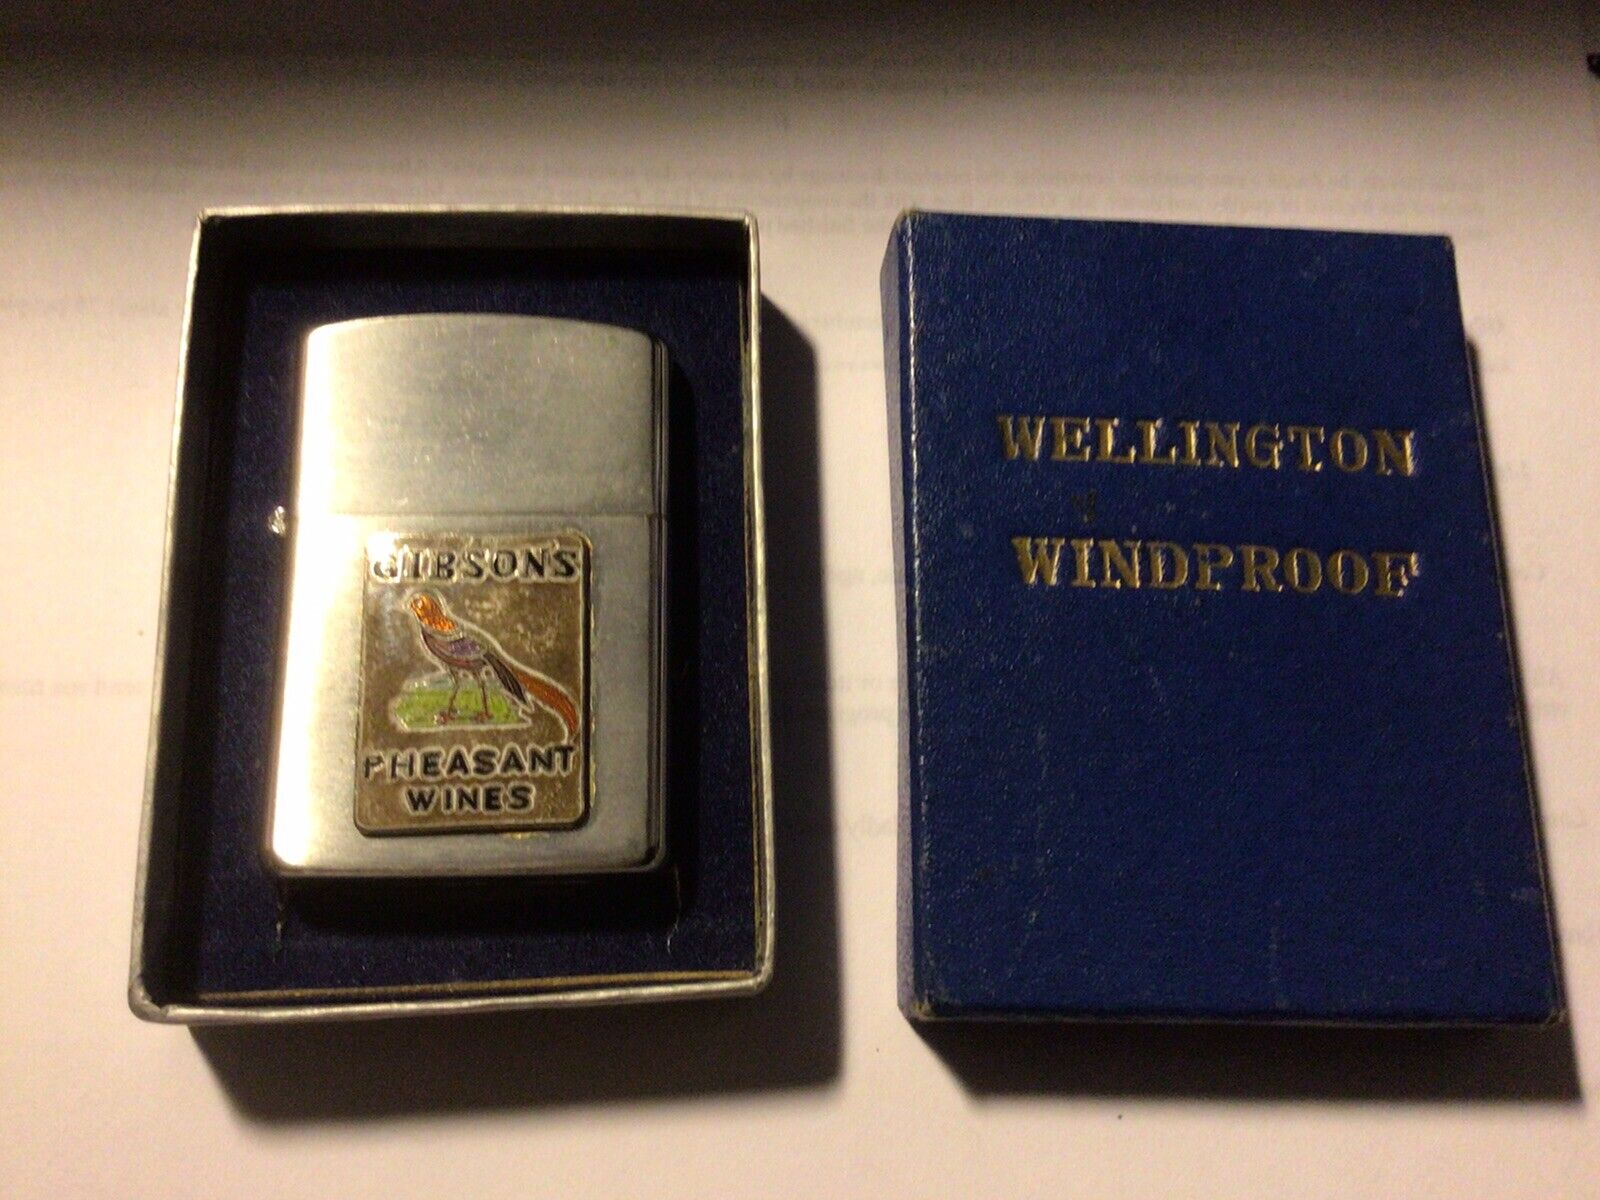 Wellington Windproof #1984 Gibson’s Winery 5-20-55 in box